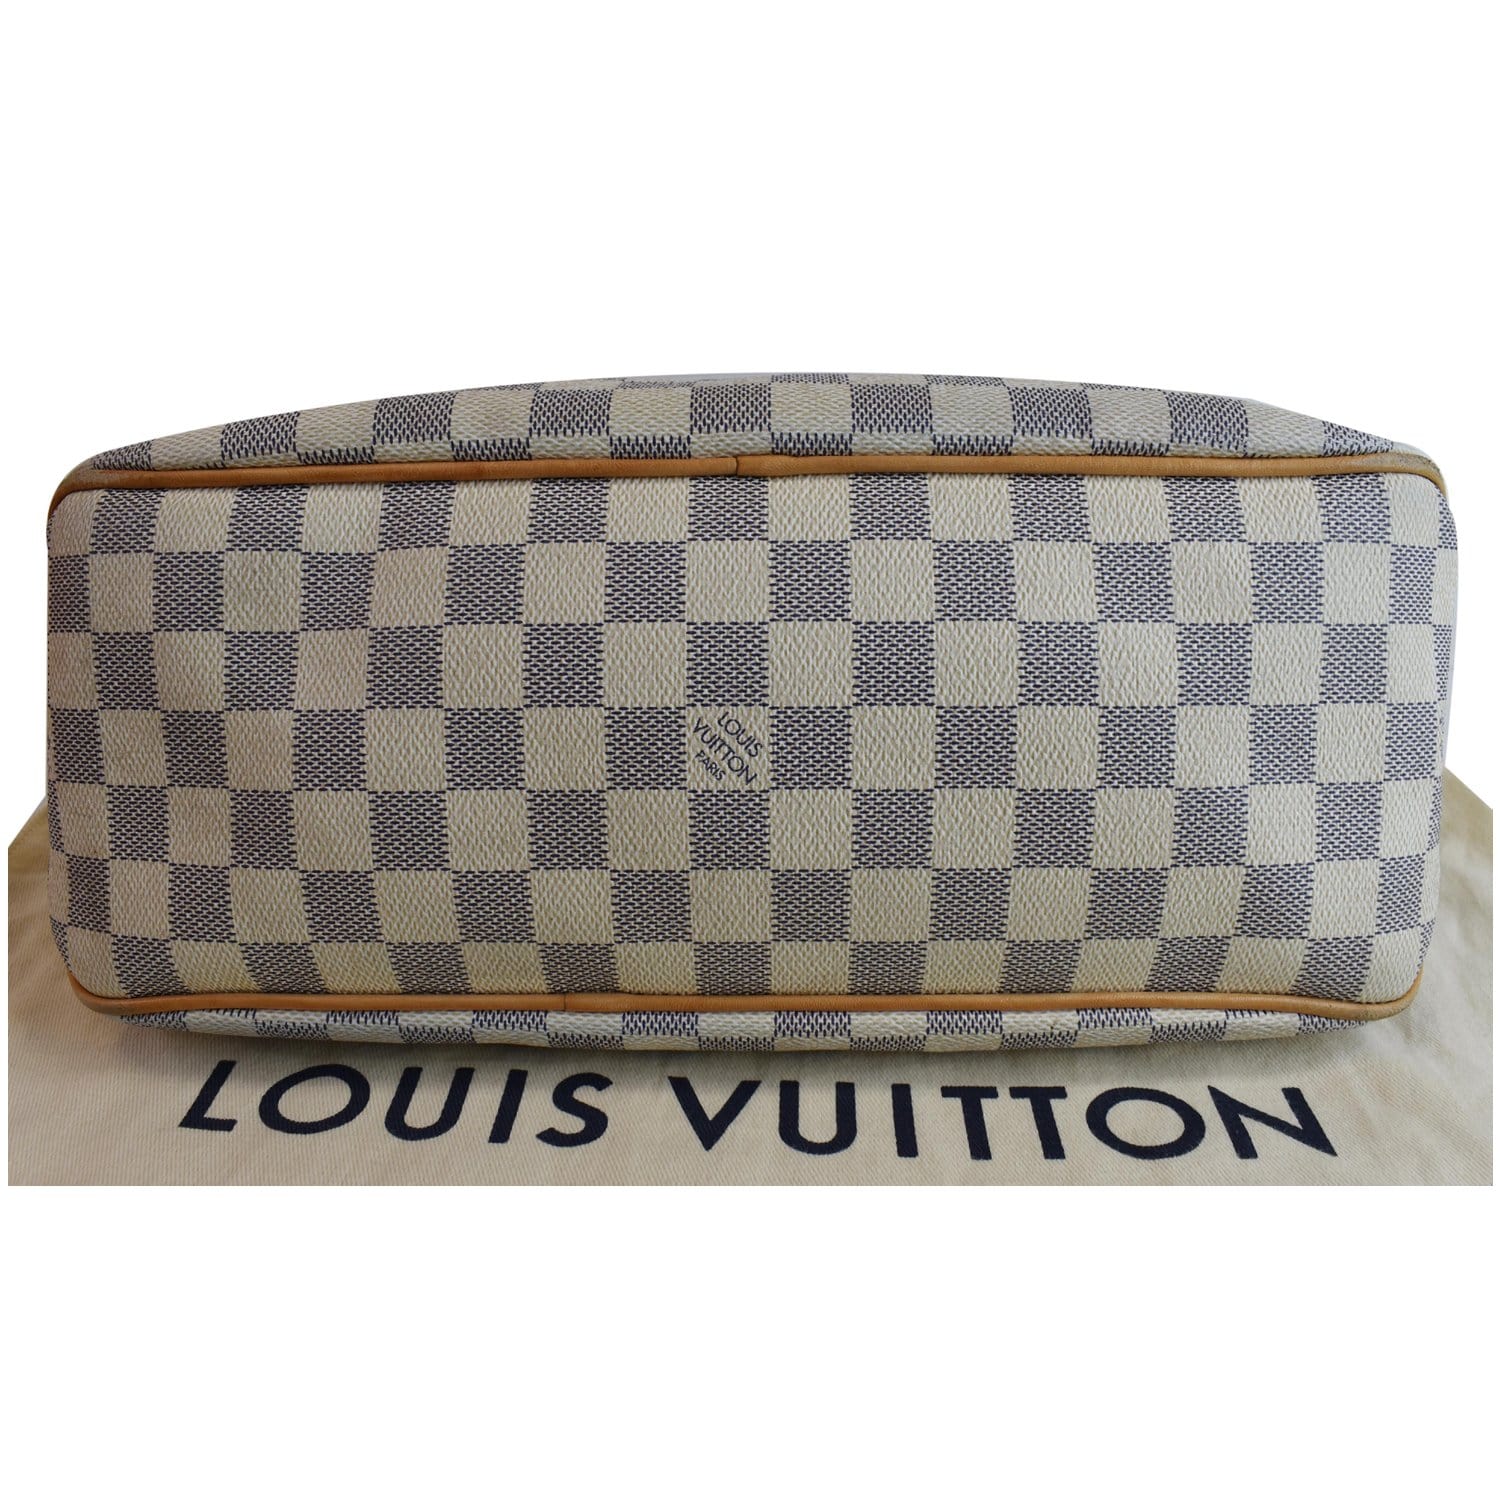 White Louis Vuitton Damier world Delightful PM Shoulder Bag, RvceShops  Revival